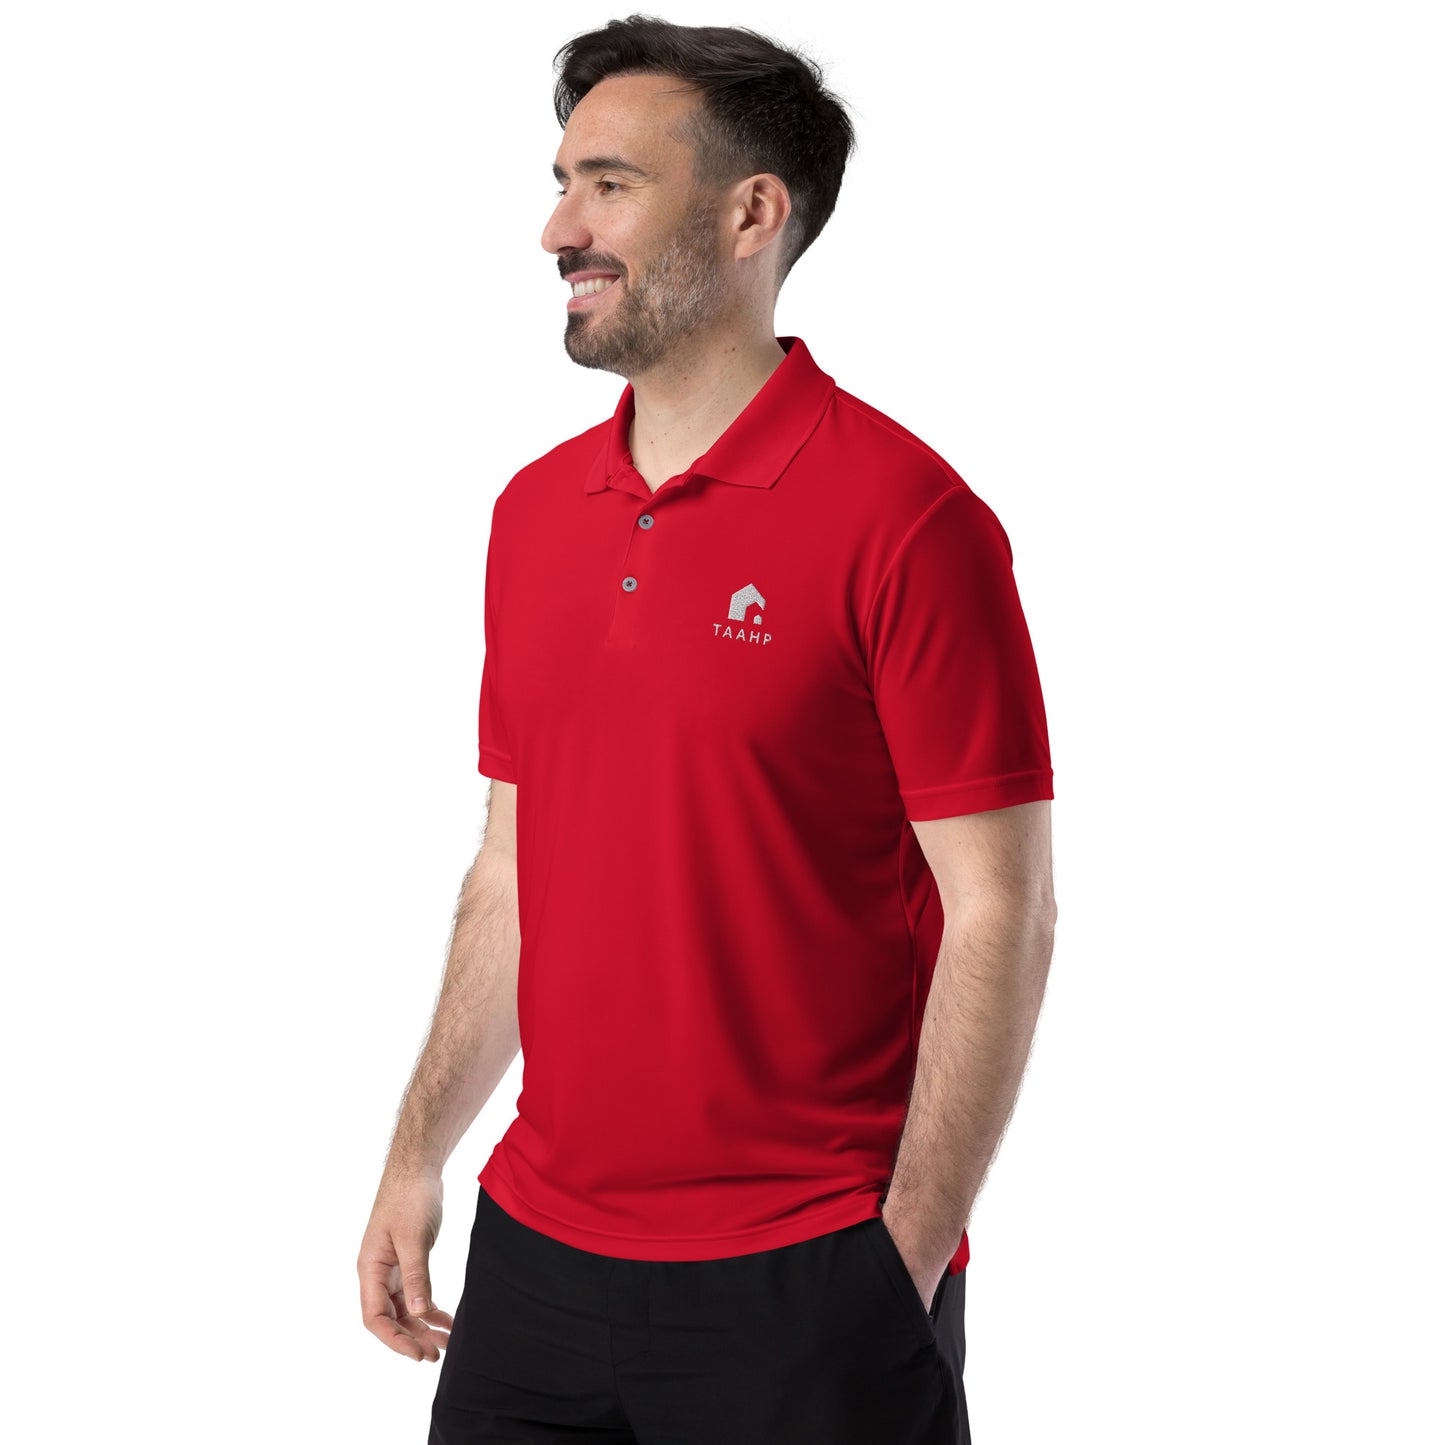 Adidas Performance Polo Shirt - TAAHP Logo